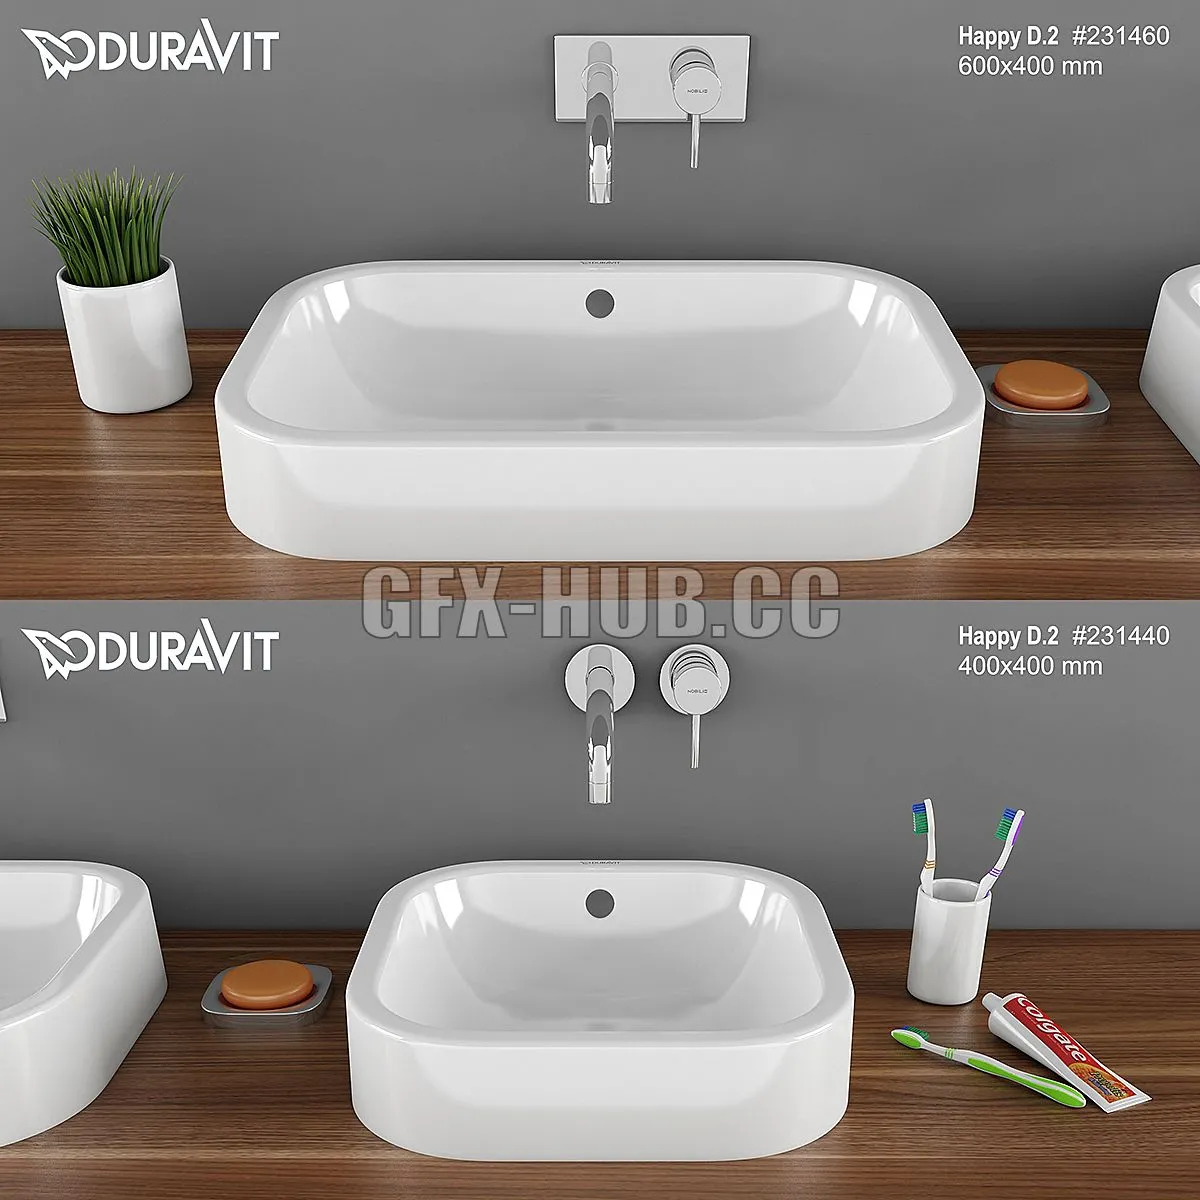 FURNITURE 3D MODELS – The Washbasin DURAVIT Happy